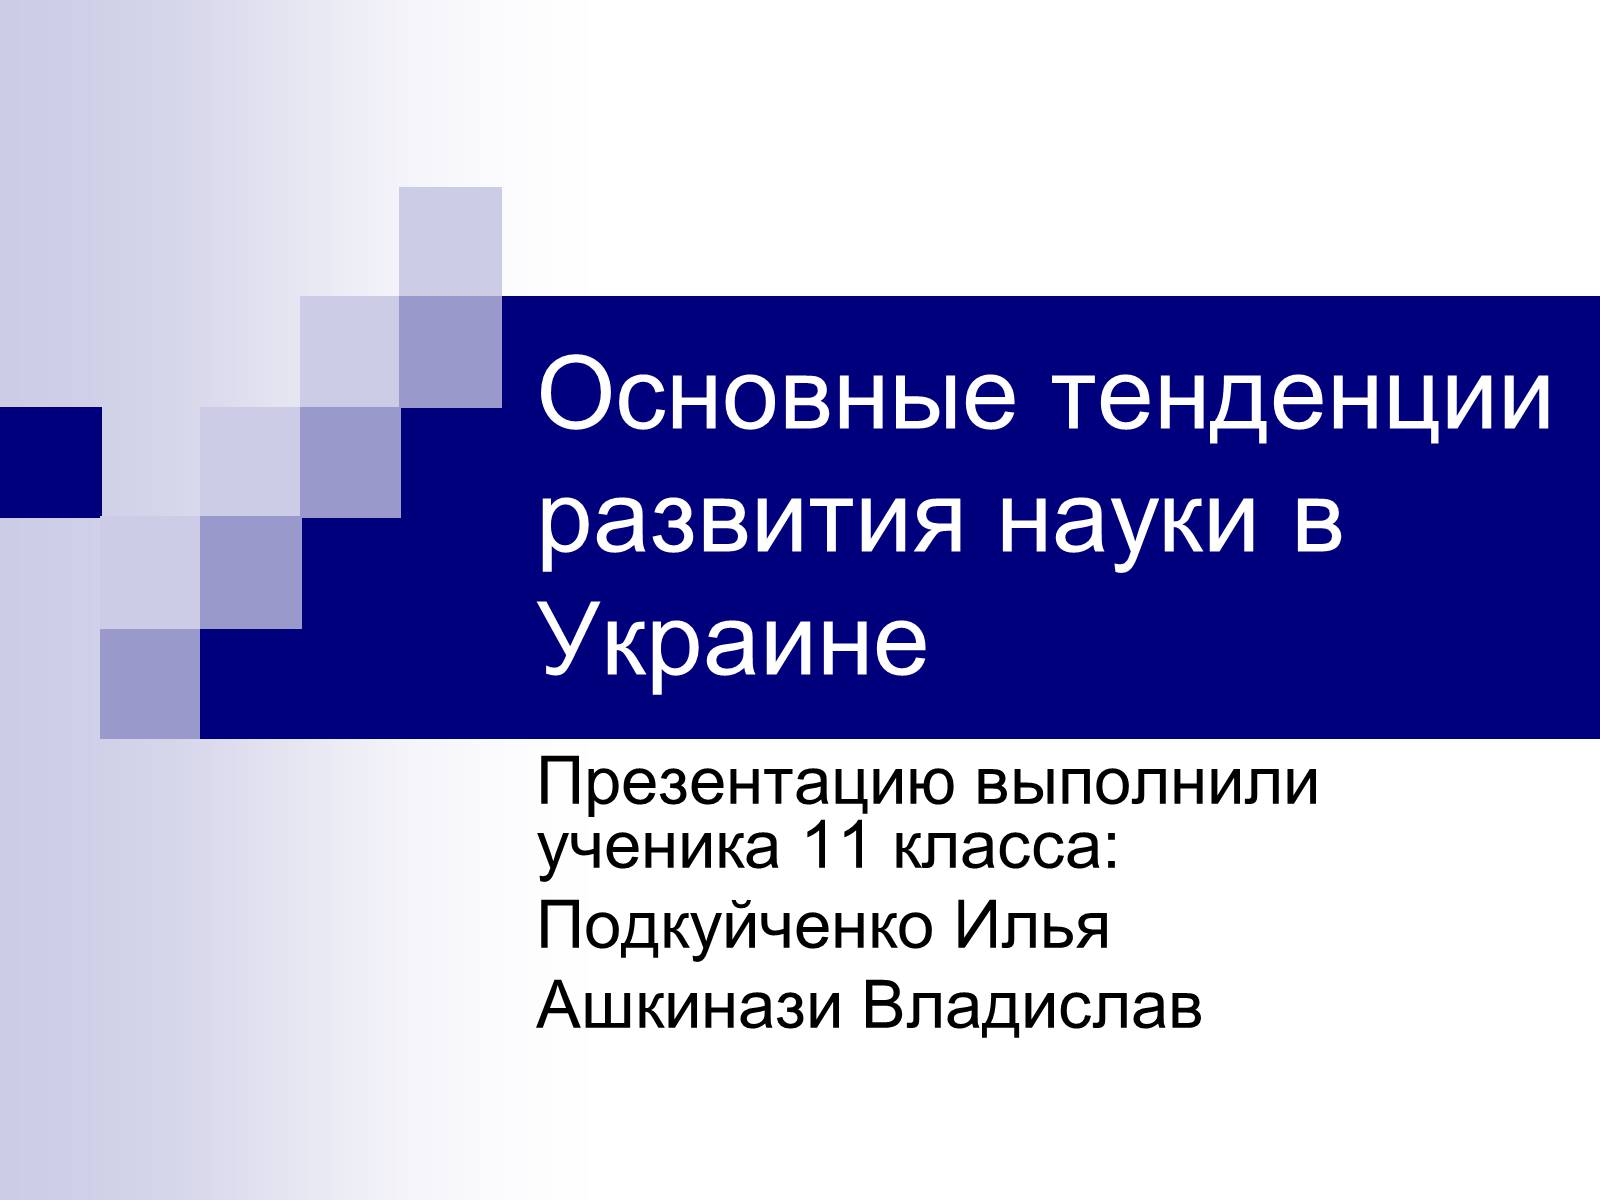 Презентація на тему «Основные тенденции развития науки в Украине» - Слайд #1